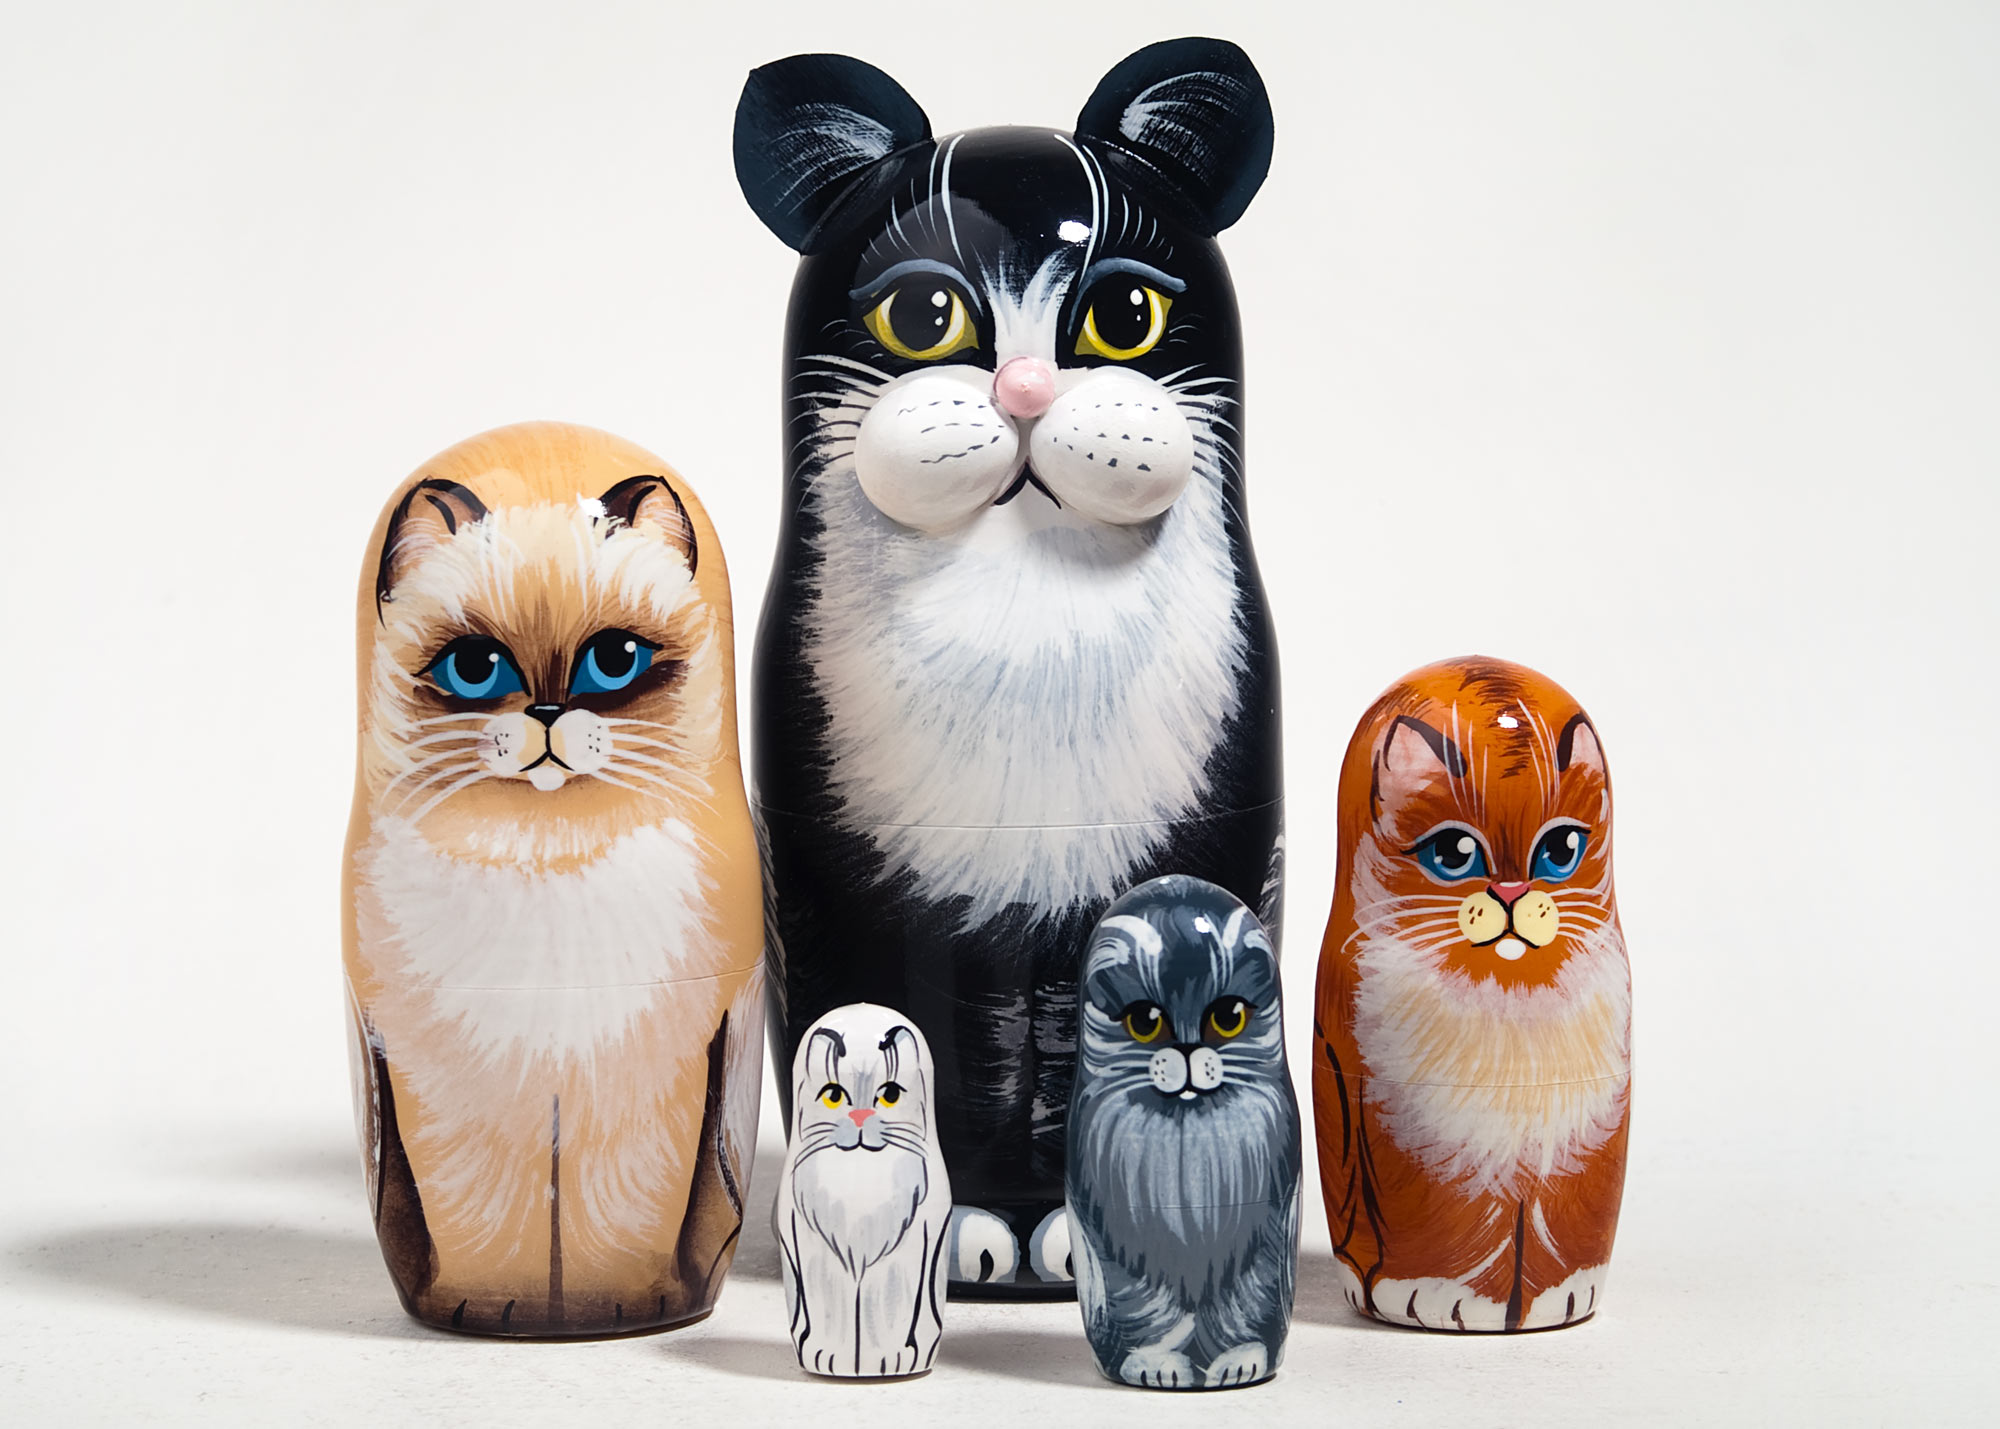 Buy Black & White Cat Doll 5pc./5"  at GoldenCockerel.com